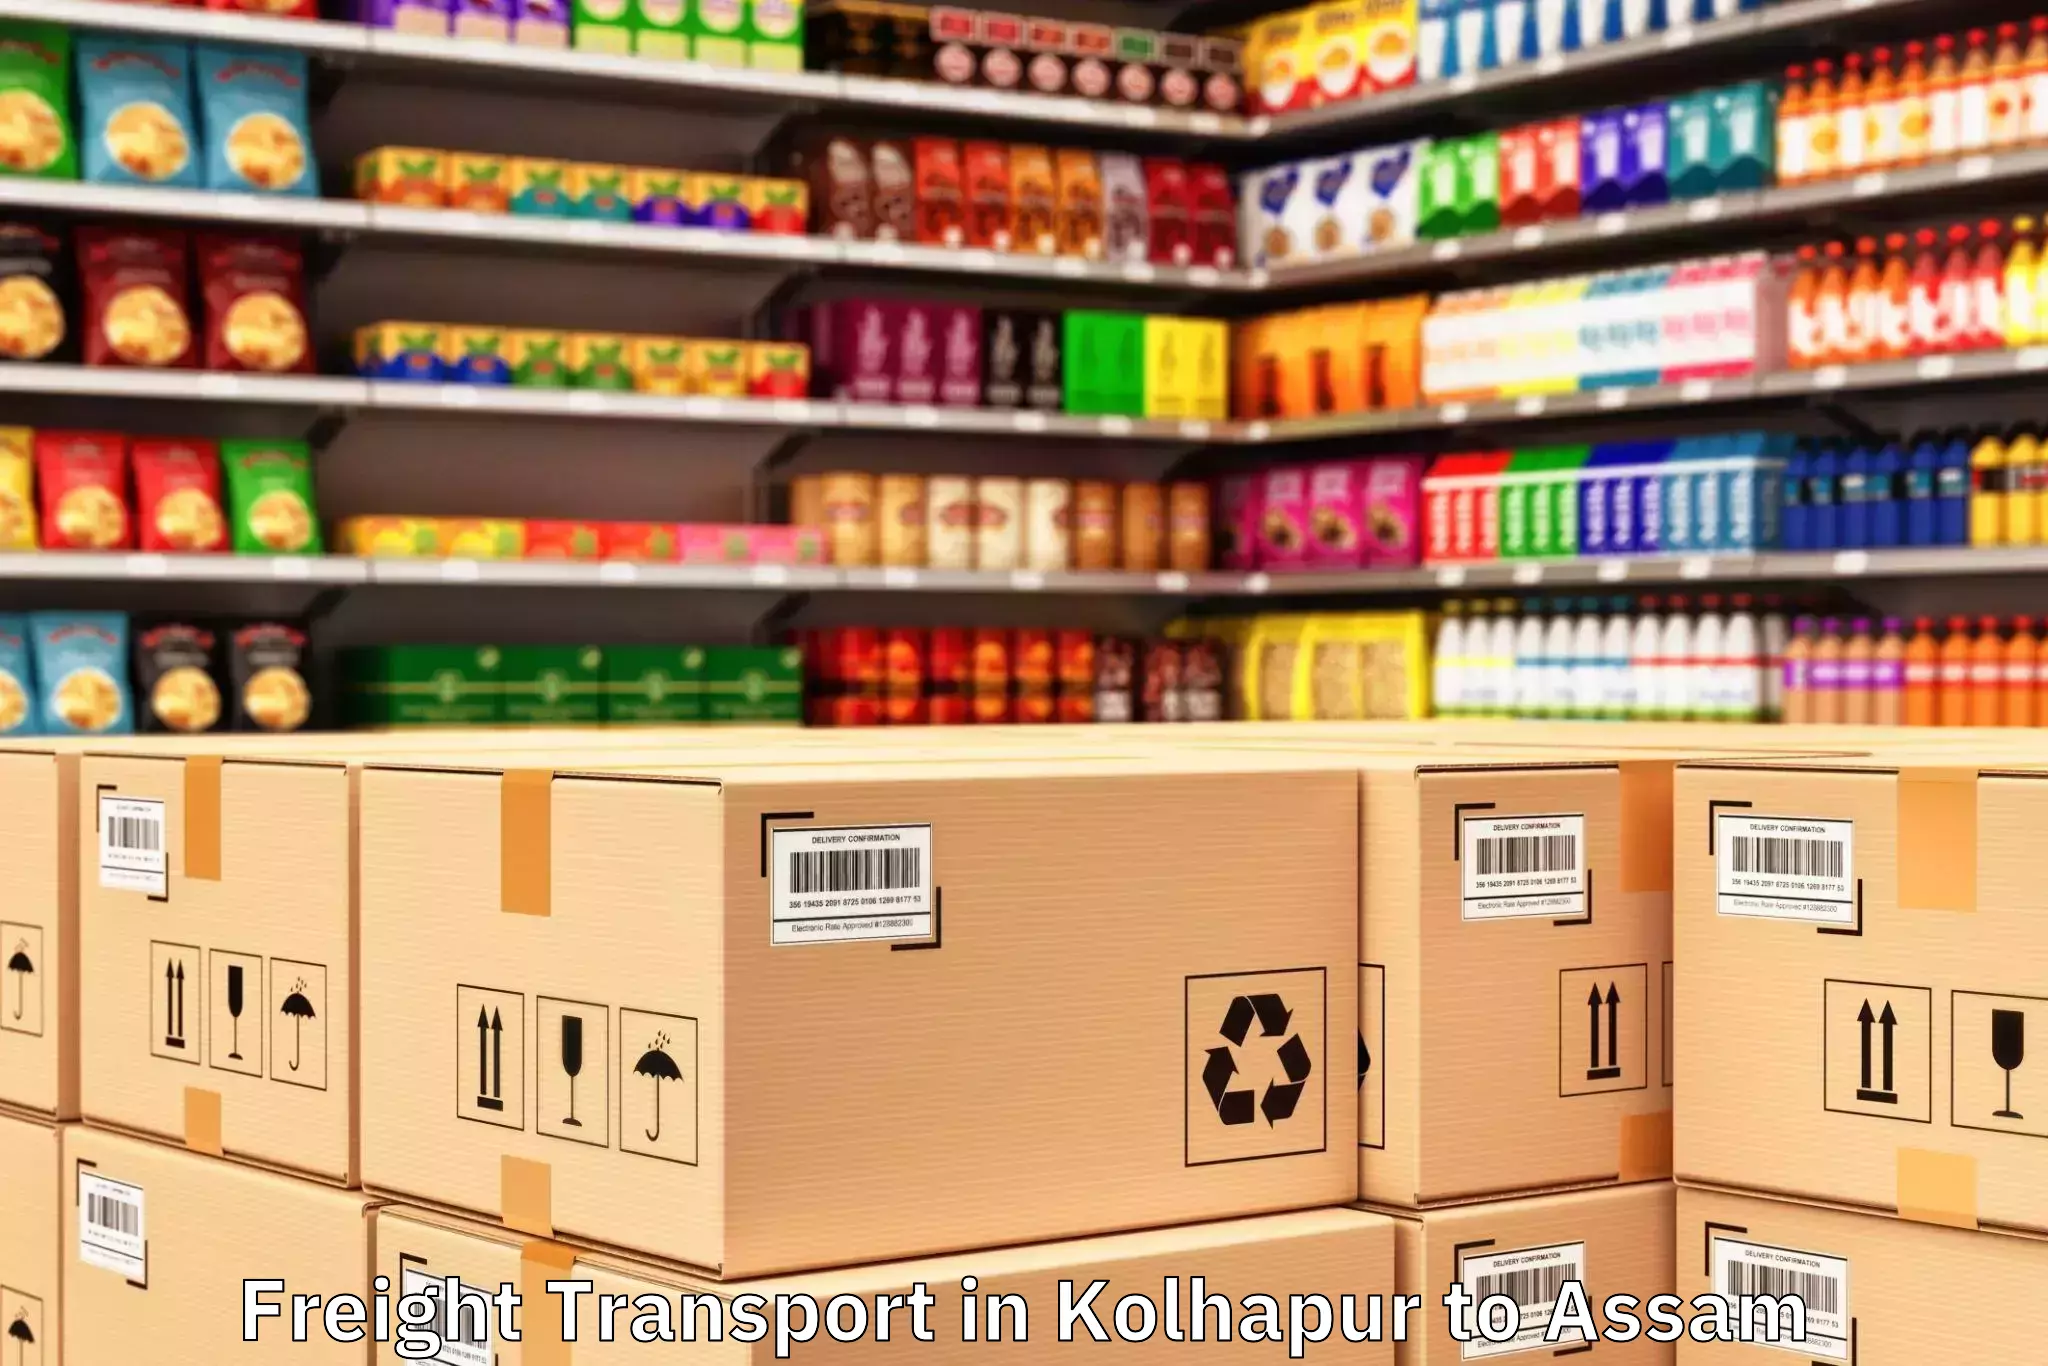 Quality Kolhapur to Jorhat Freight Transport